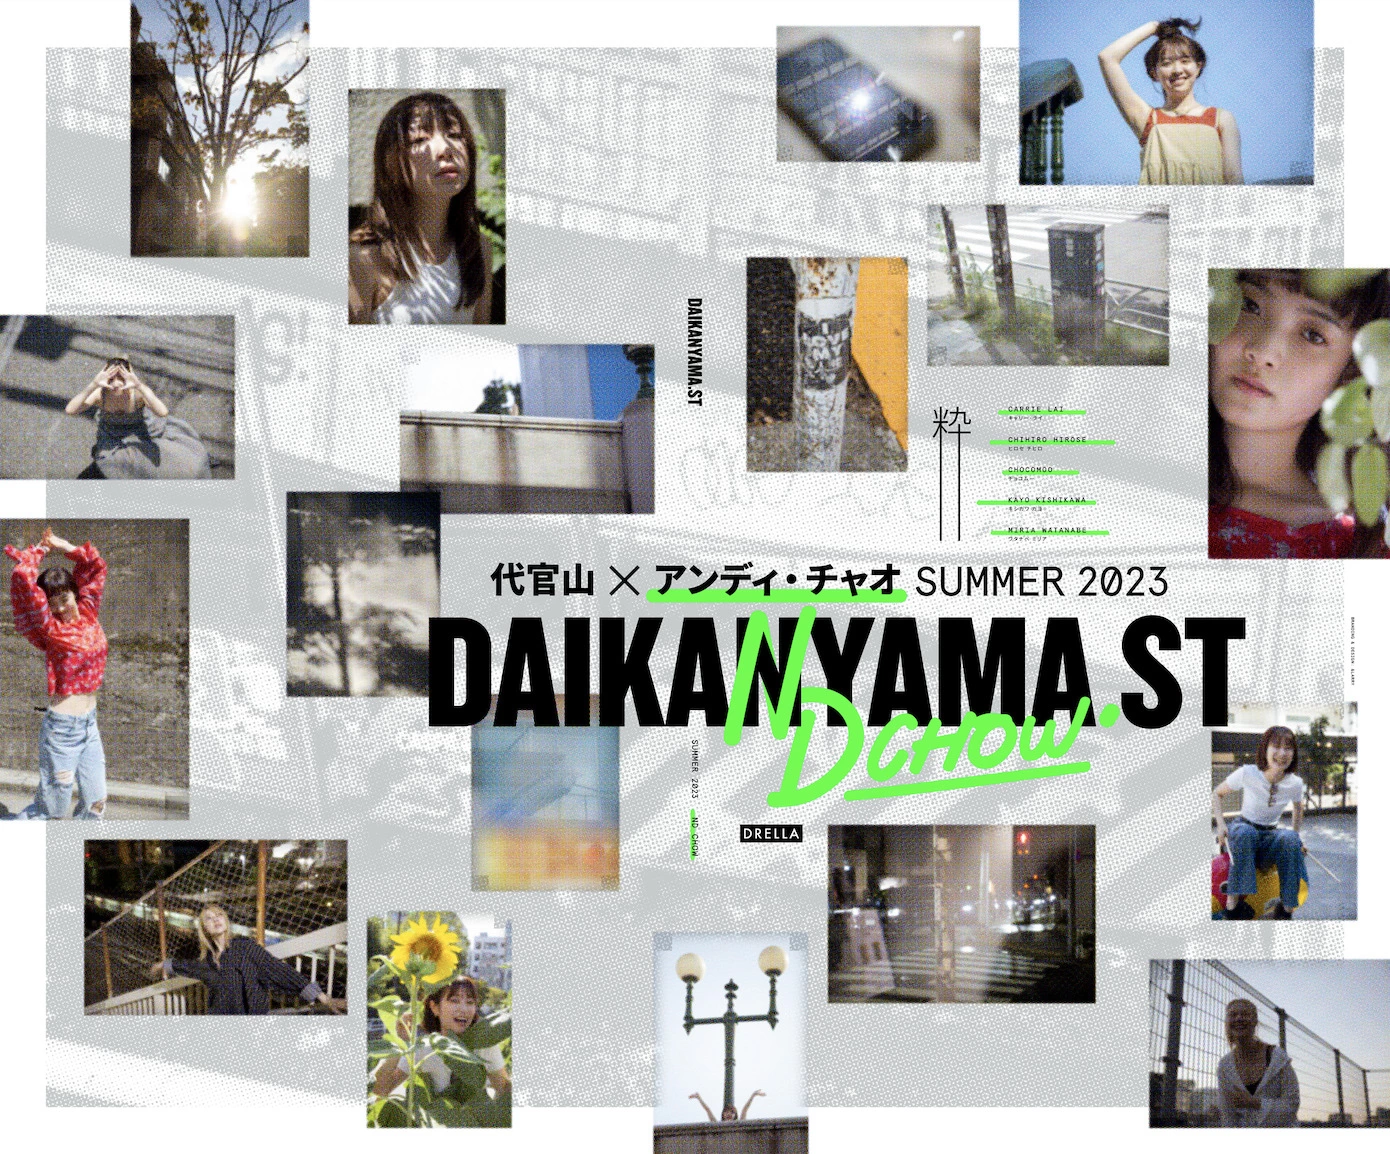 ND CHOW PHOTO EXHIBITION「DAIKANYAMA.ST」SUMMER 2023 feat. CARRIE LAI, CHIHIRO HIROSE, CHOCOMOO, KAYO KISHIKAWA, MIRIA WATANABE